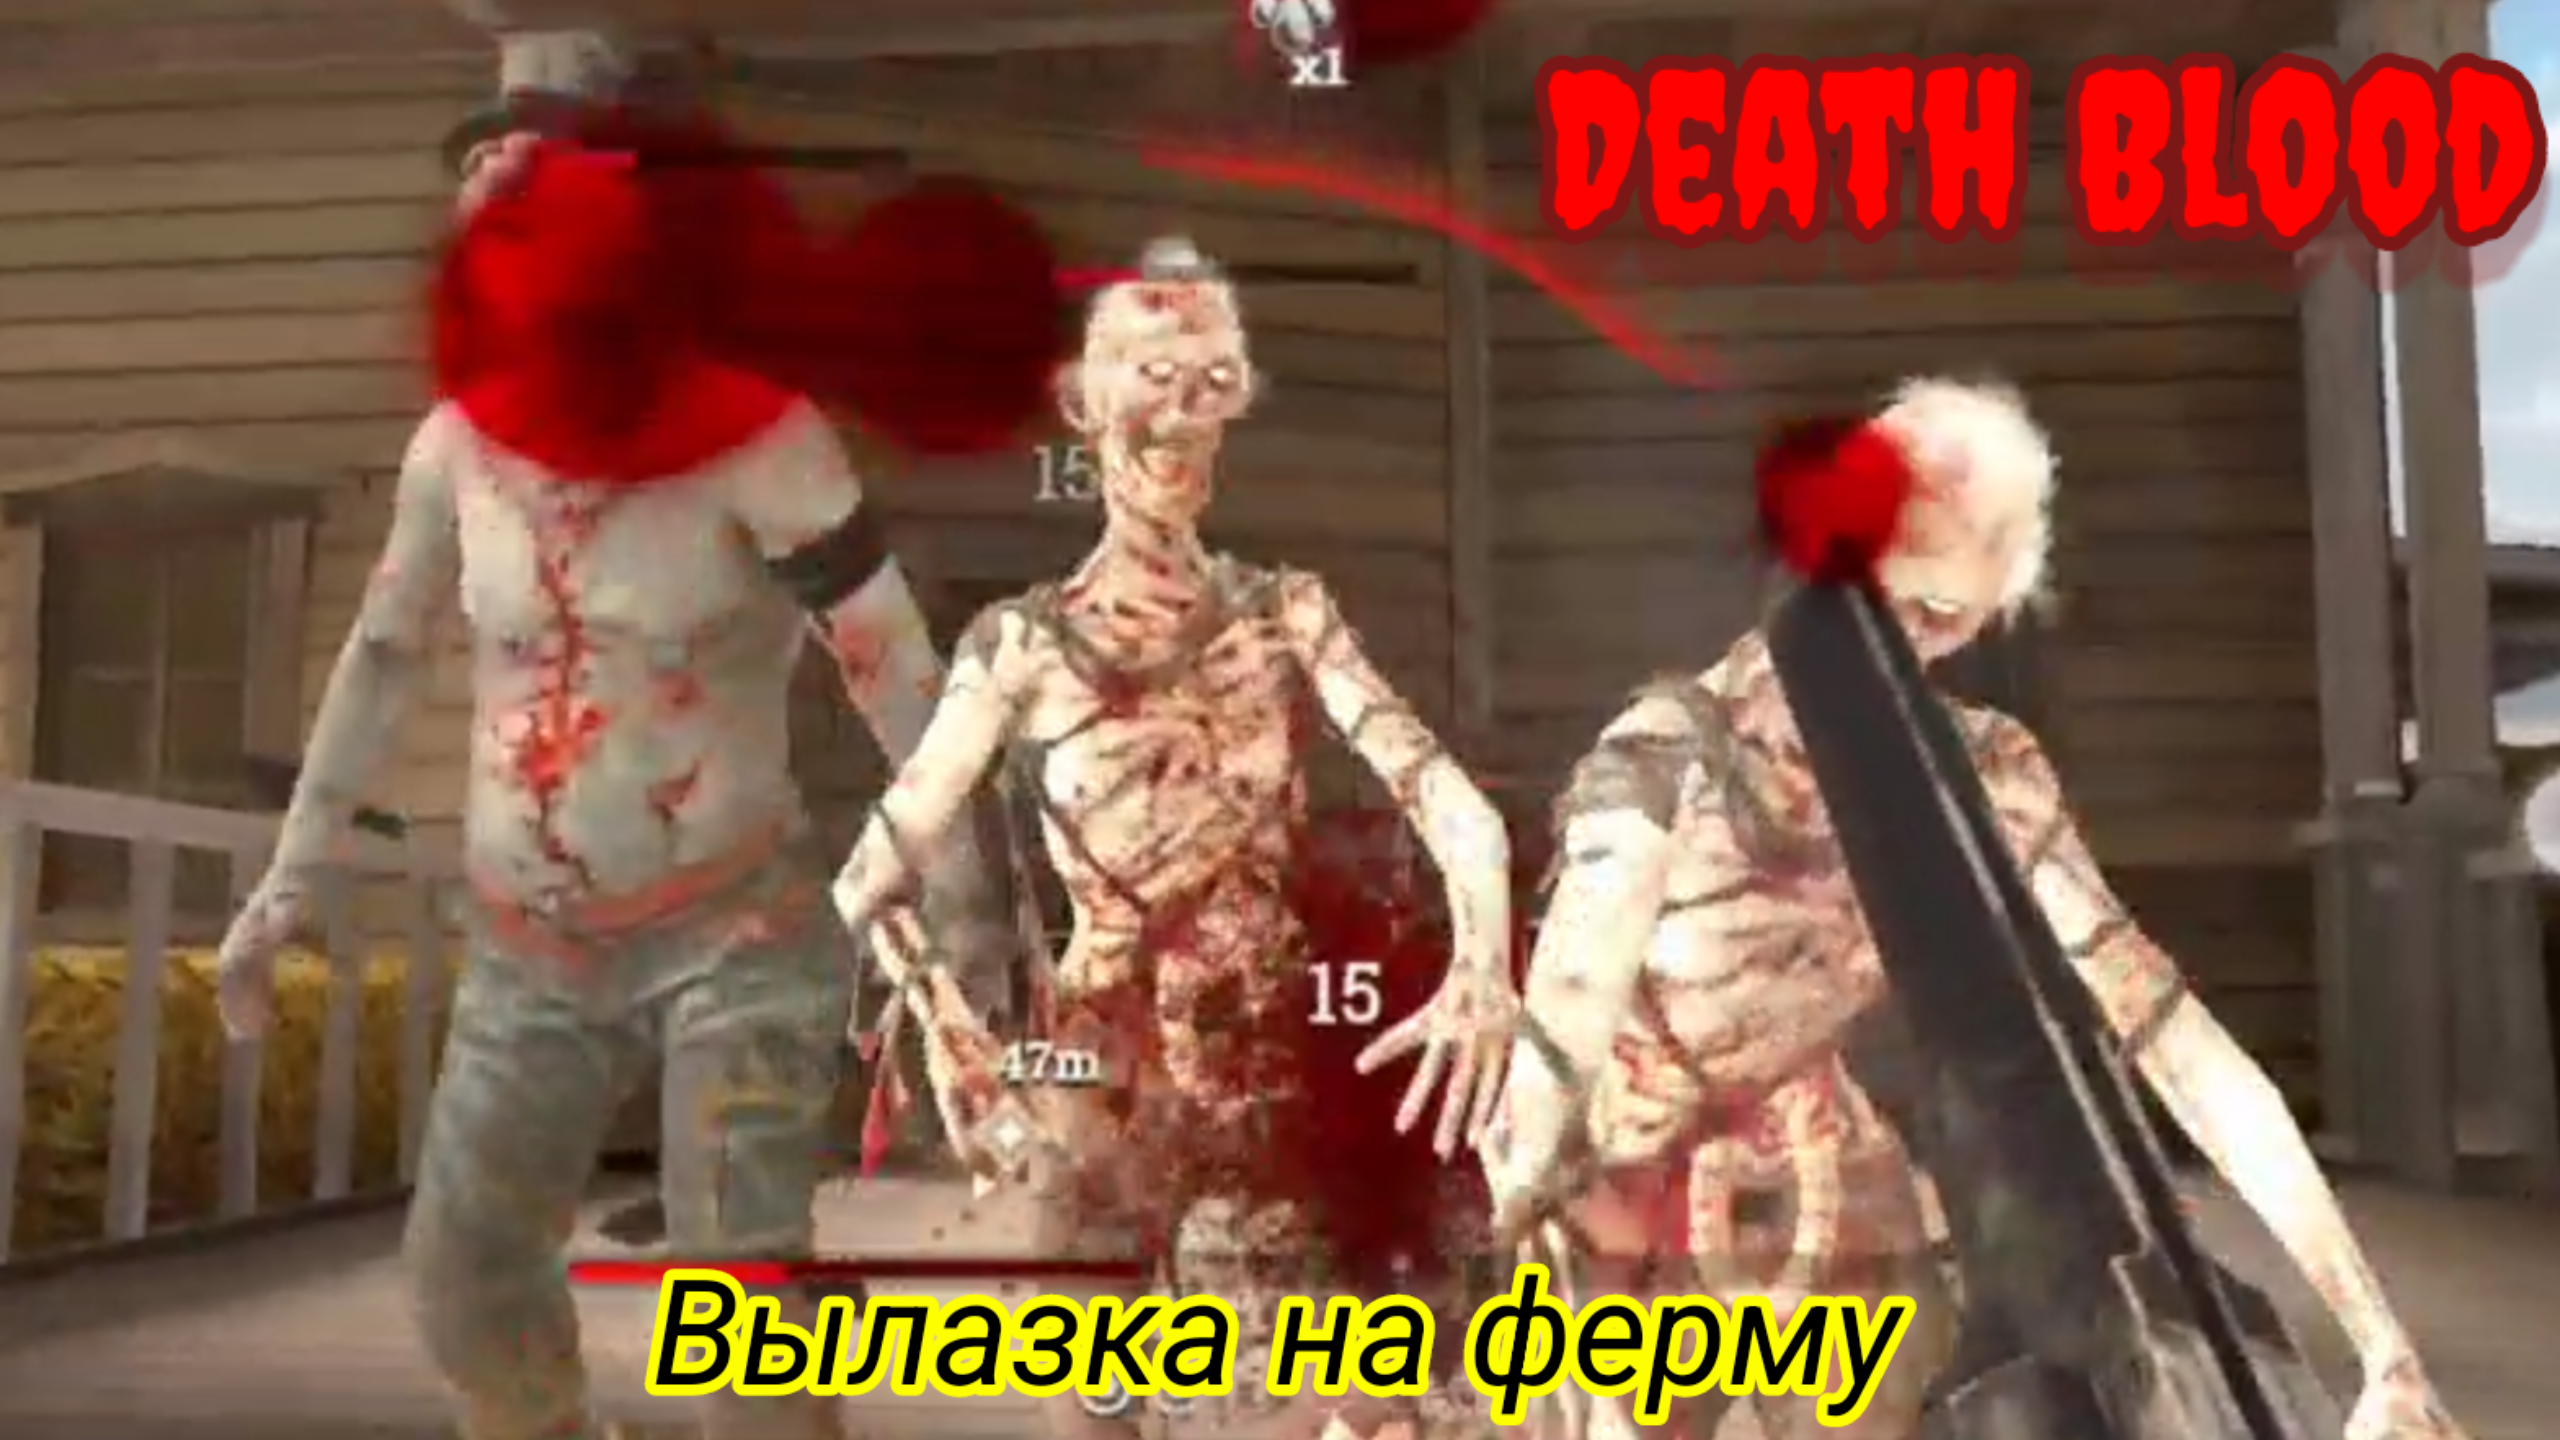 Death Blood: Сделал вылазку на ферму / Death Blood: Made a foray to the farm